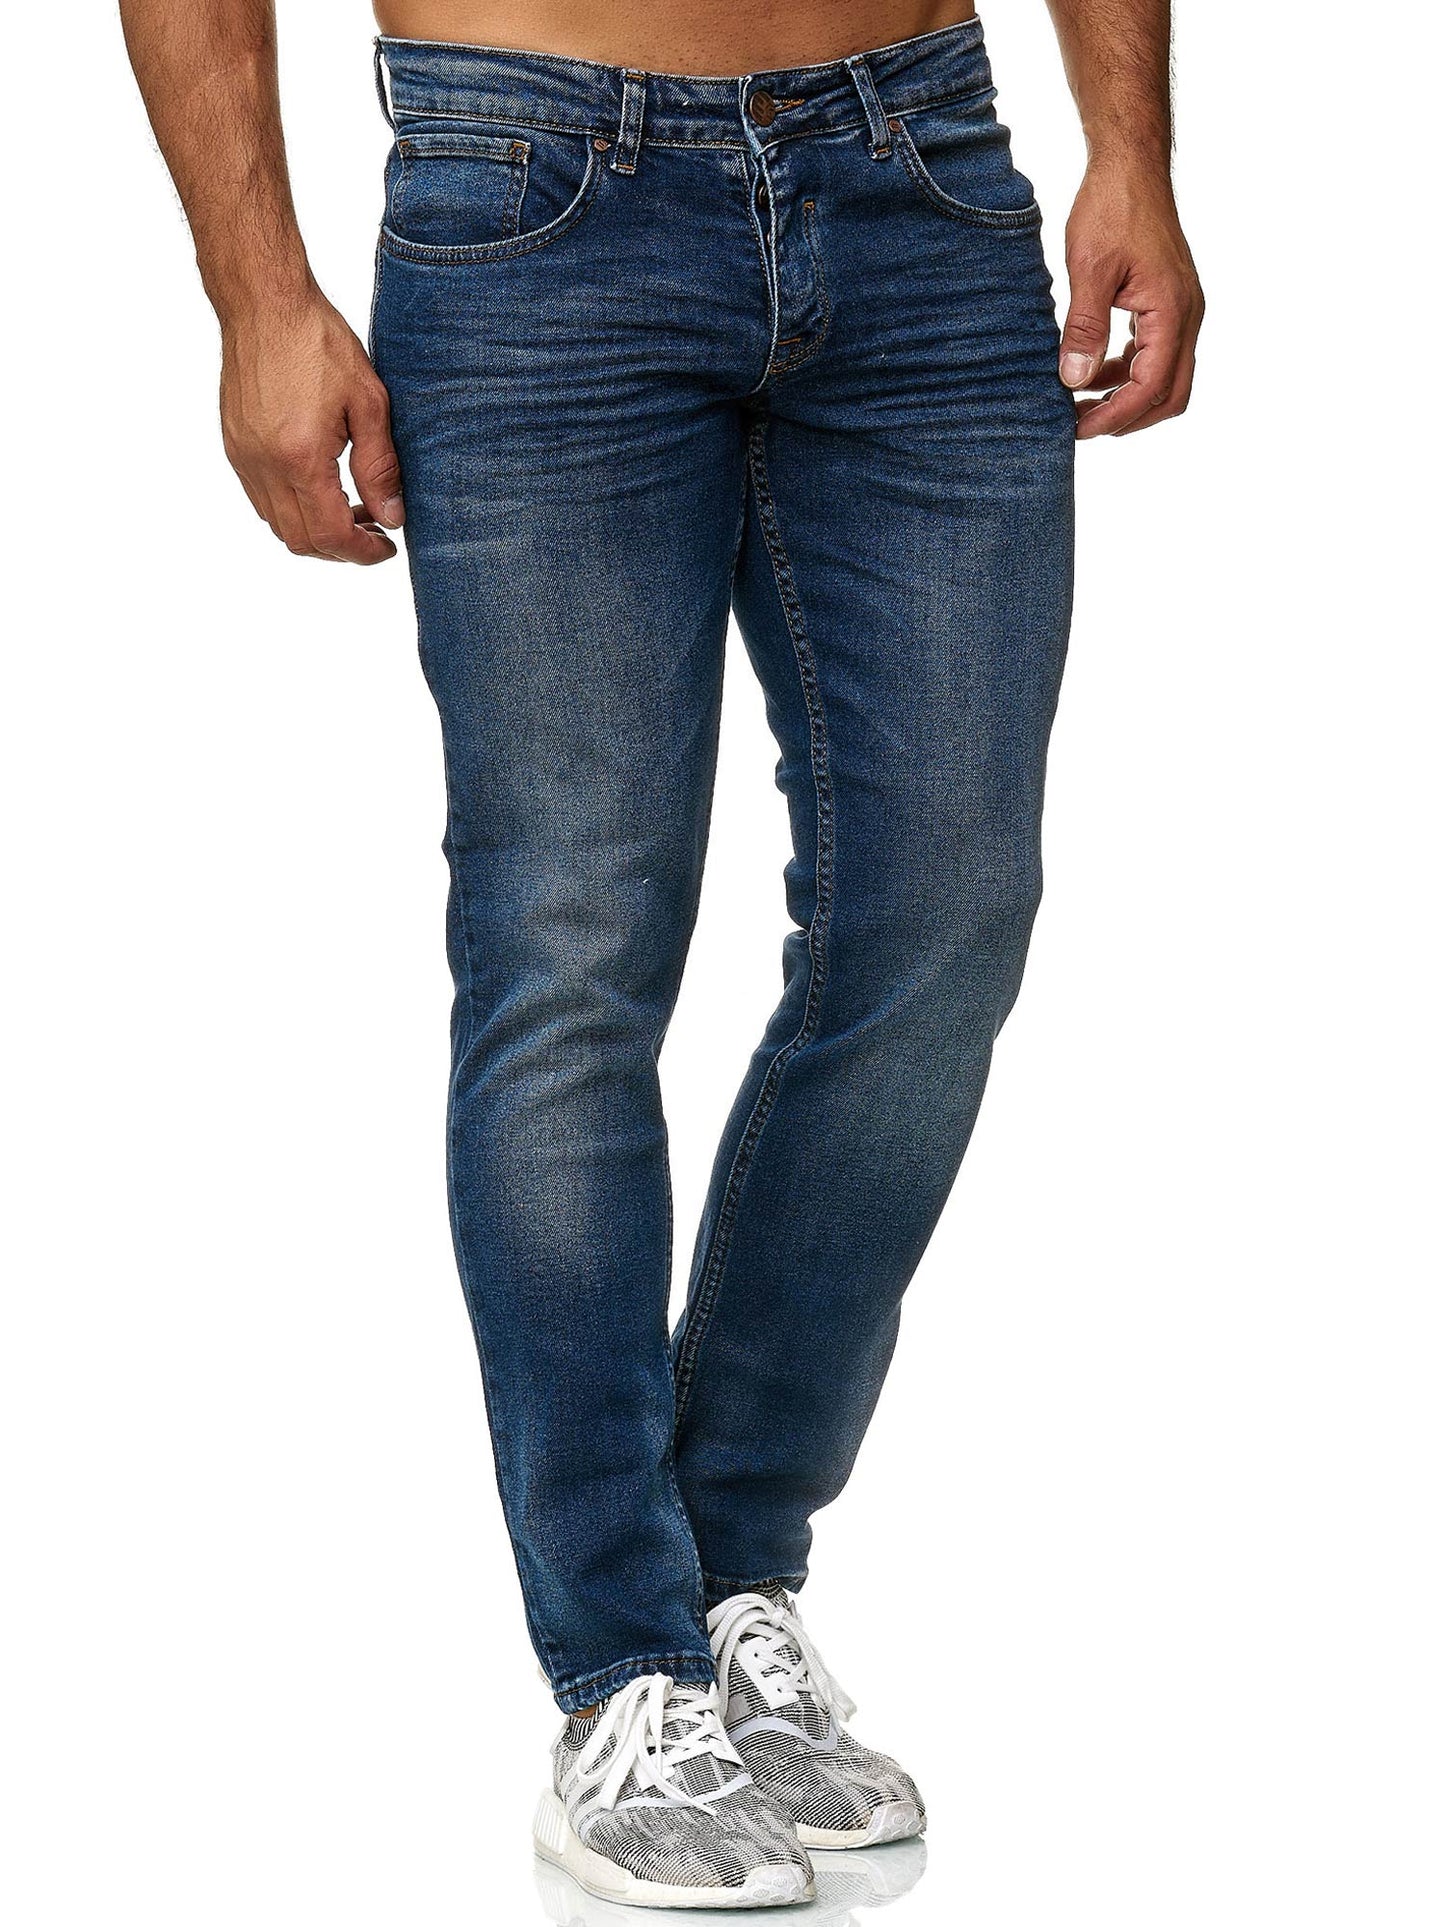 Tazzio Herren Jeans Slim Fit 16533 Blau-1